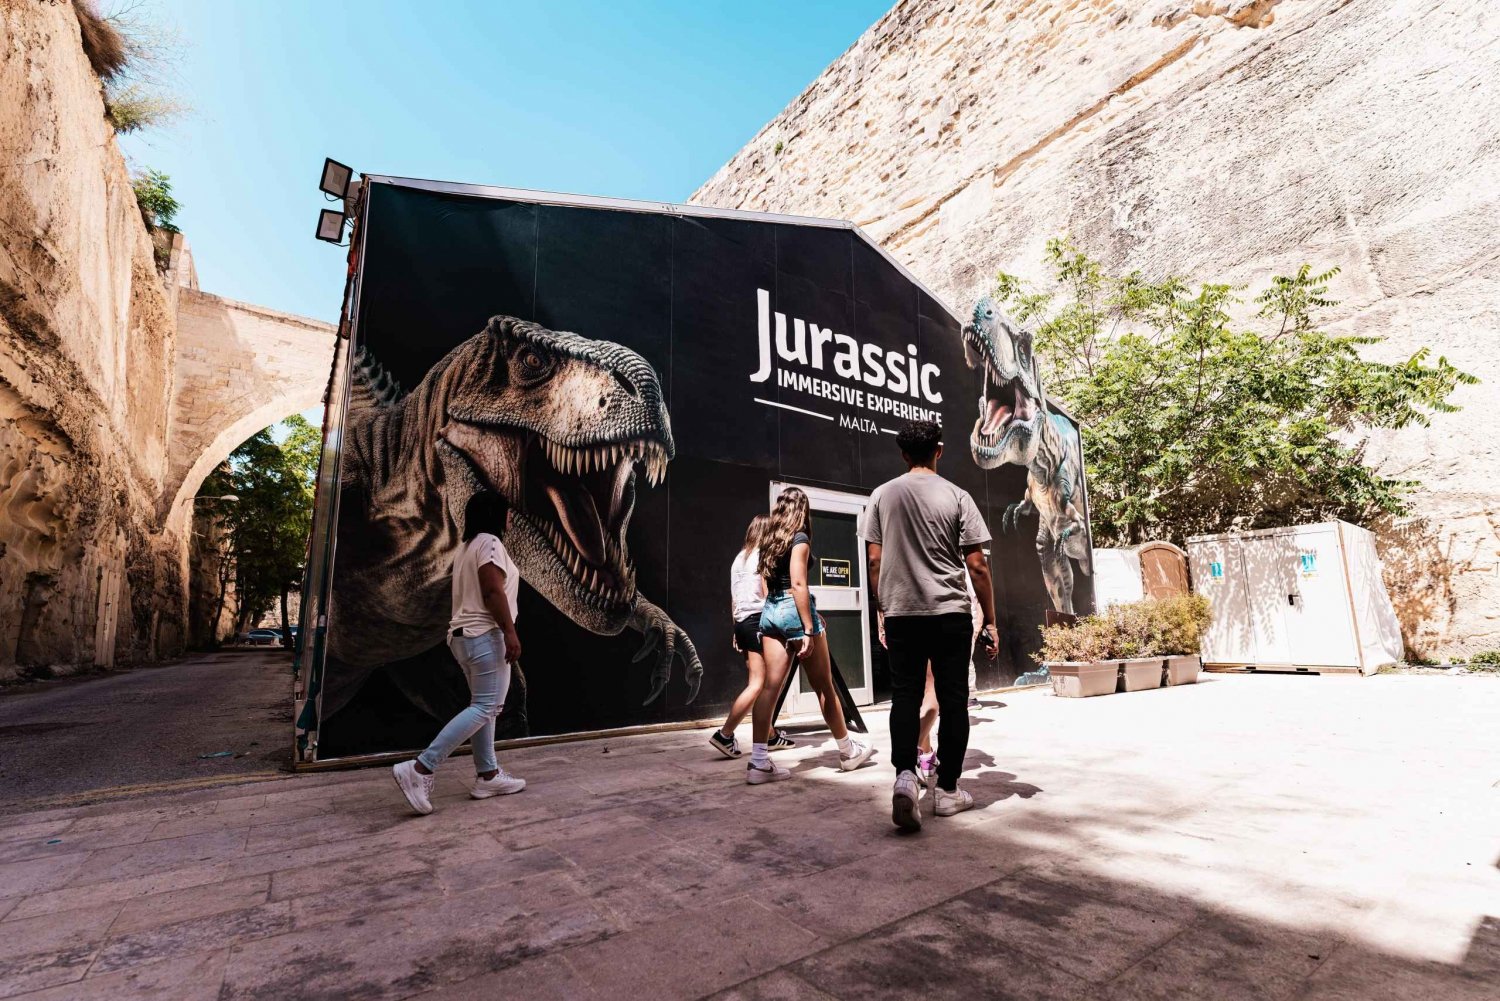 Jurassic - Esperienza immersiva a Malta